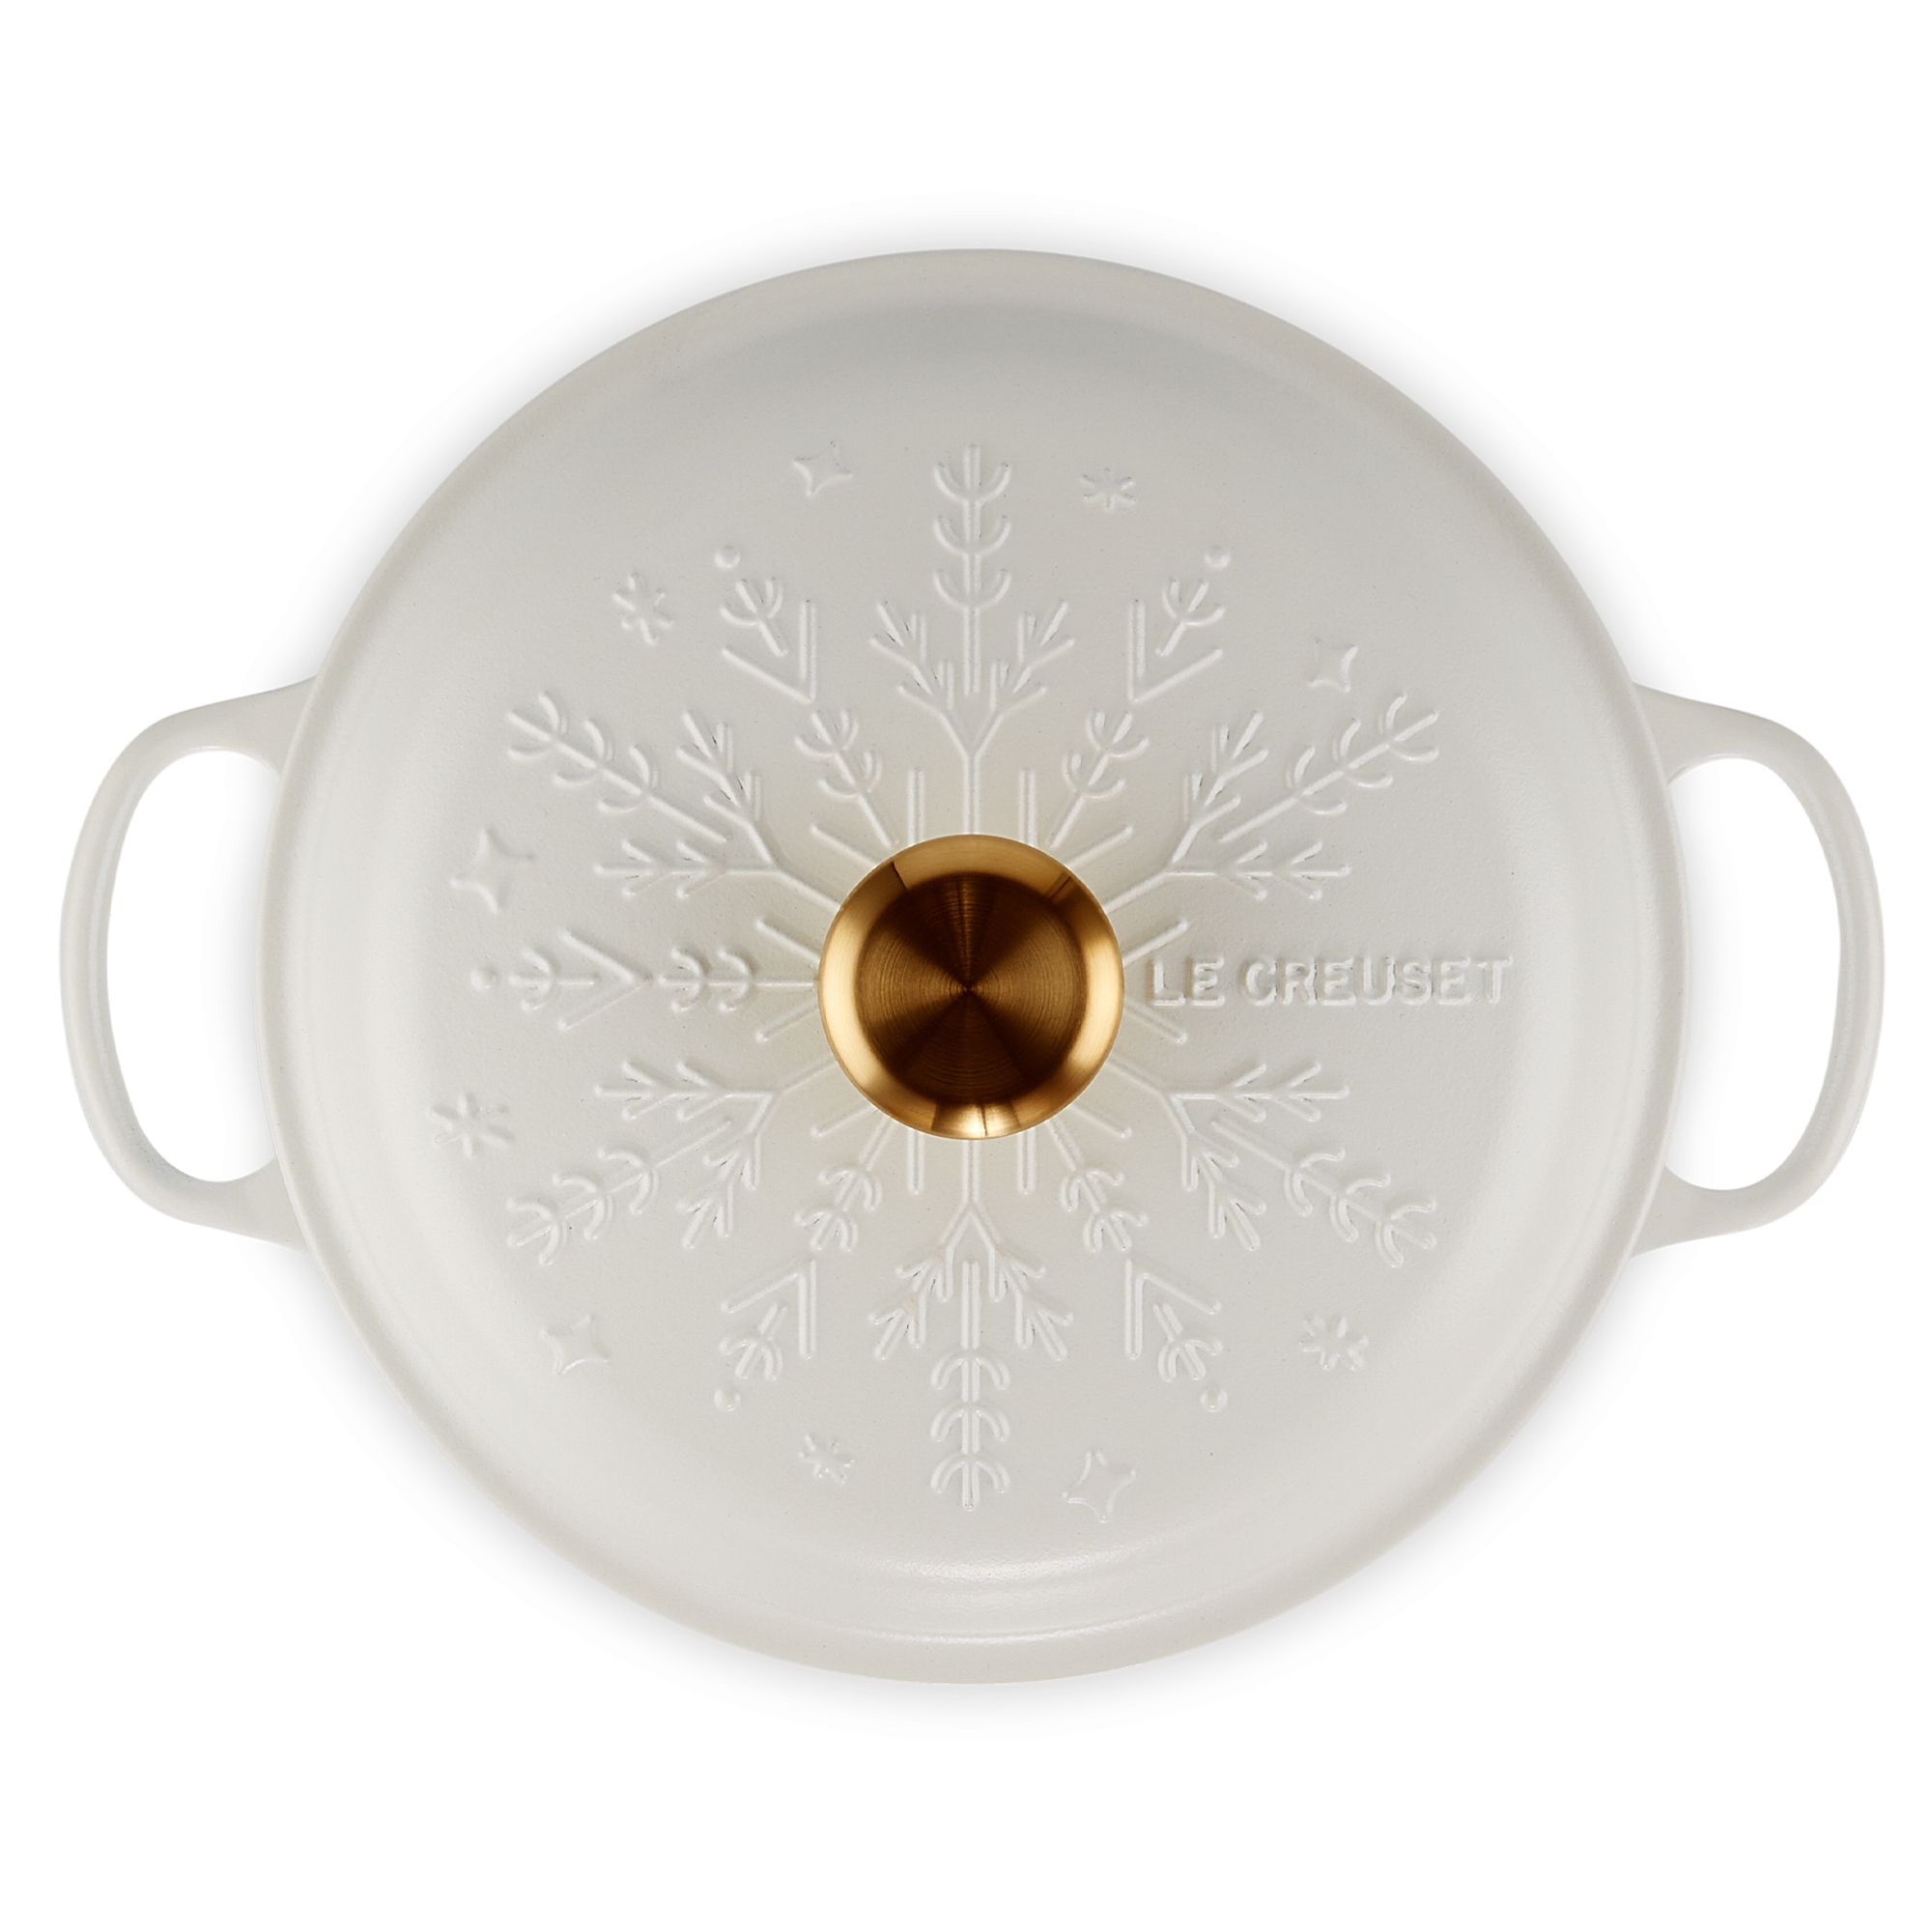 Le Creuset - Gourmet-Profitopf Schneeflocke mit Goldknopf 26 cm